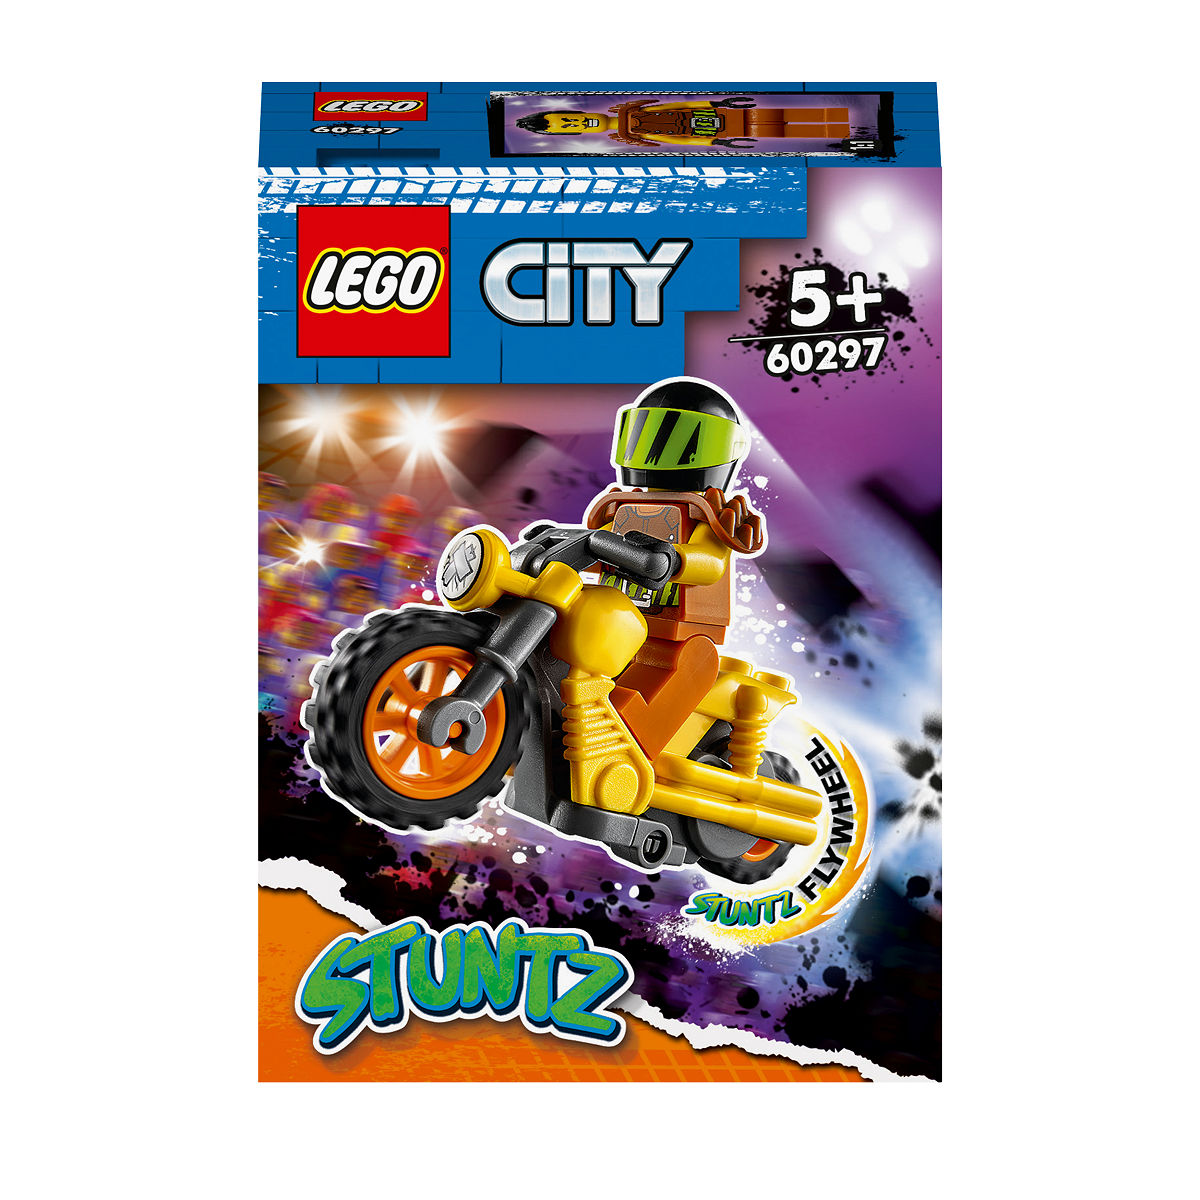 LEGO CITY 60297 STUNT BIKE - 5702016912715 - 526399